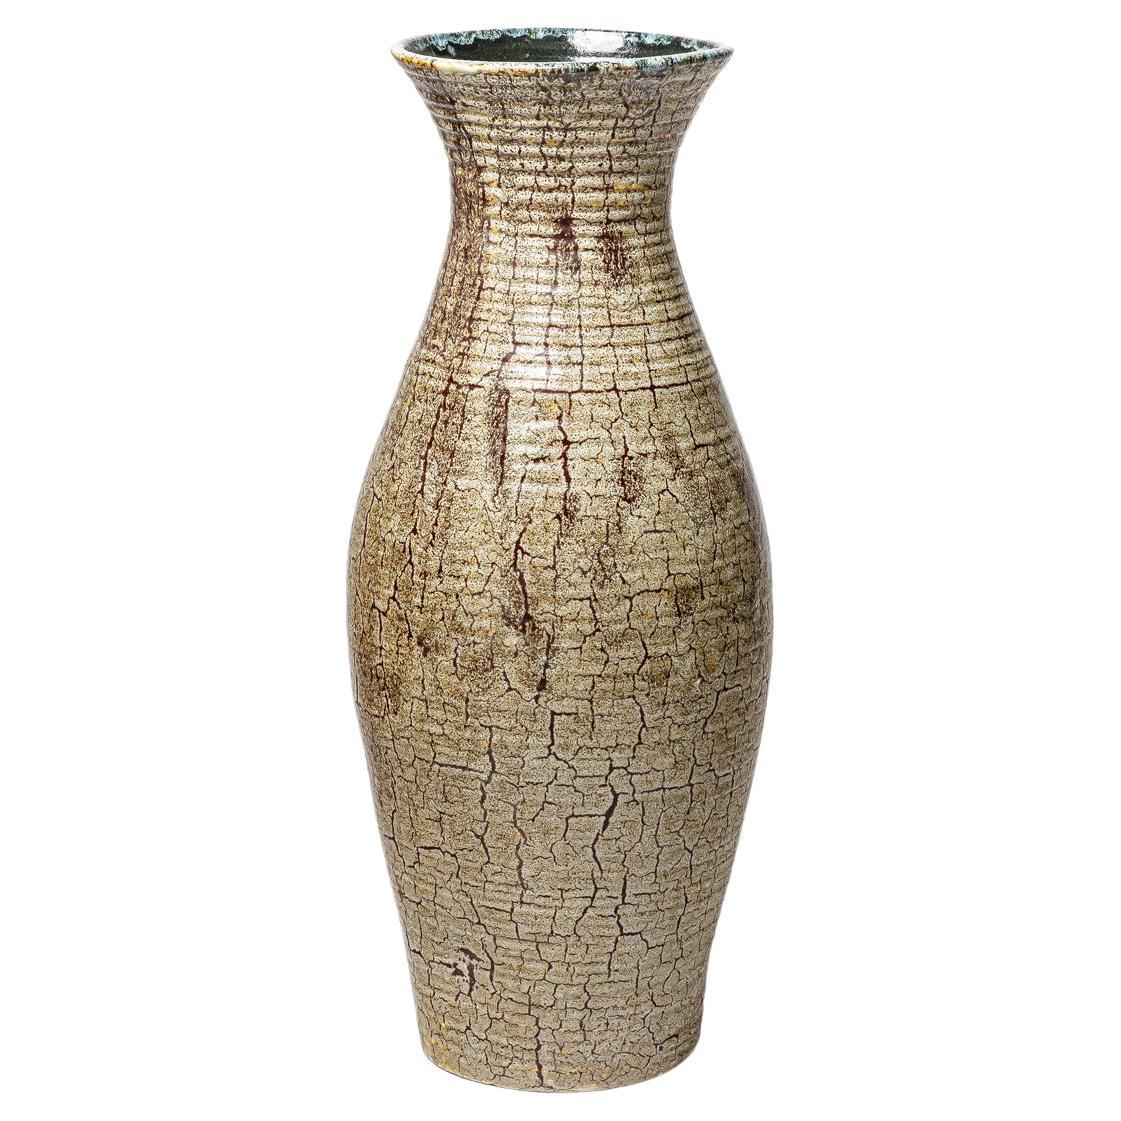  Vase en grès émaillé Brown par Accolay, vers 1960-1970. en vente